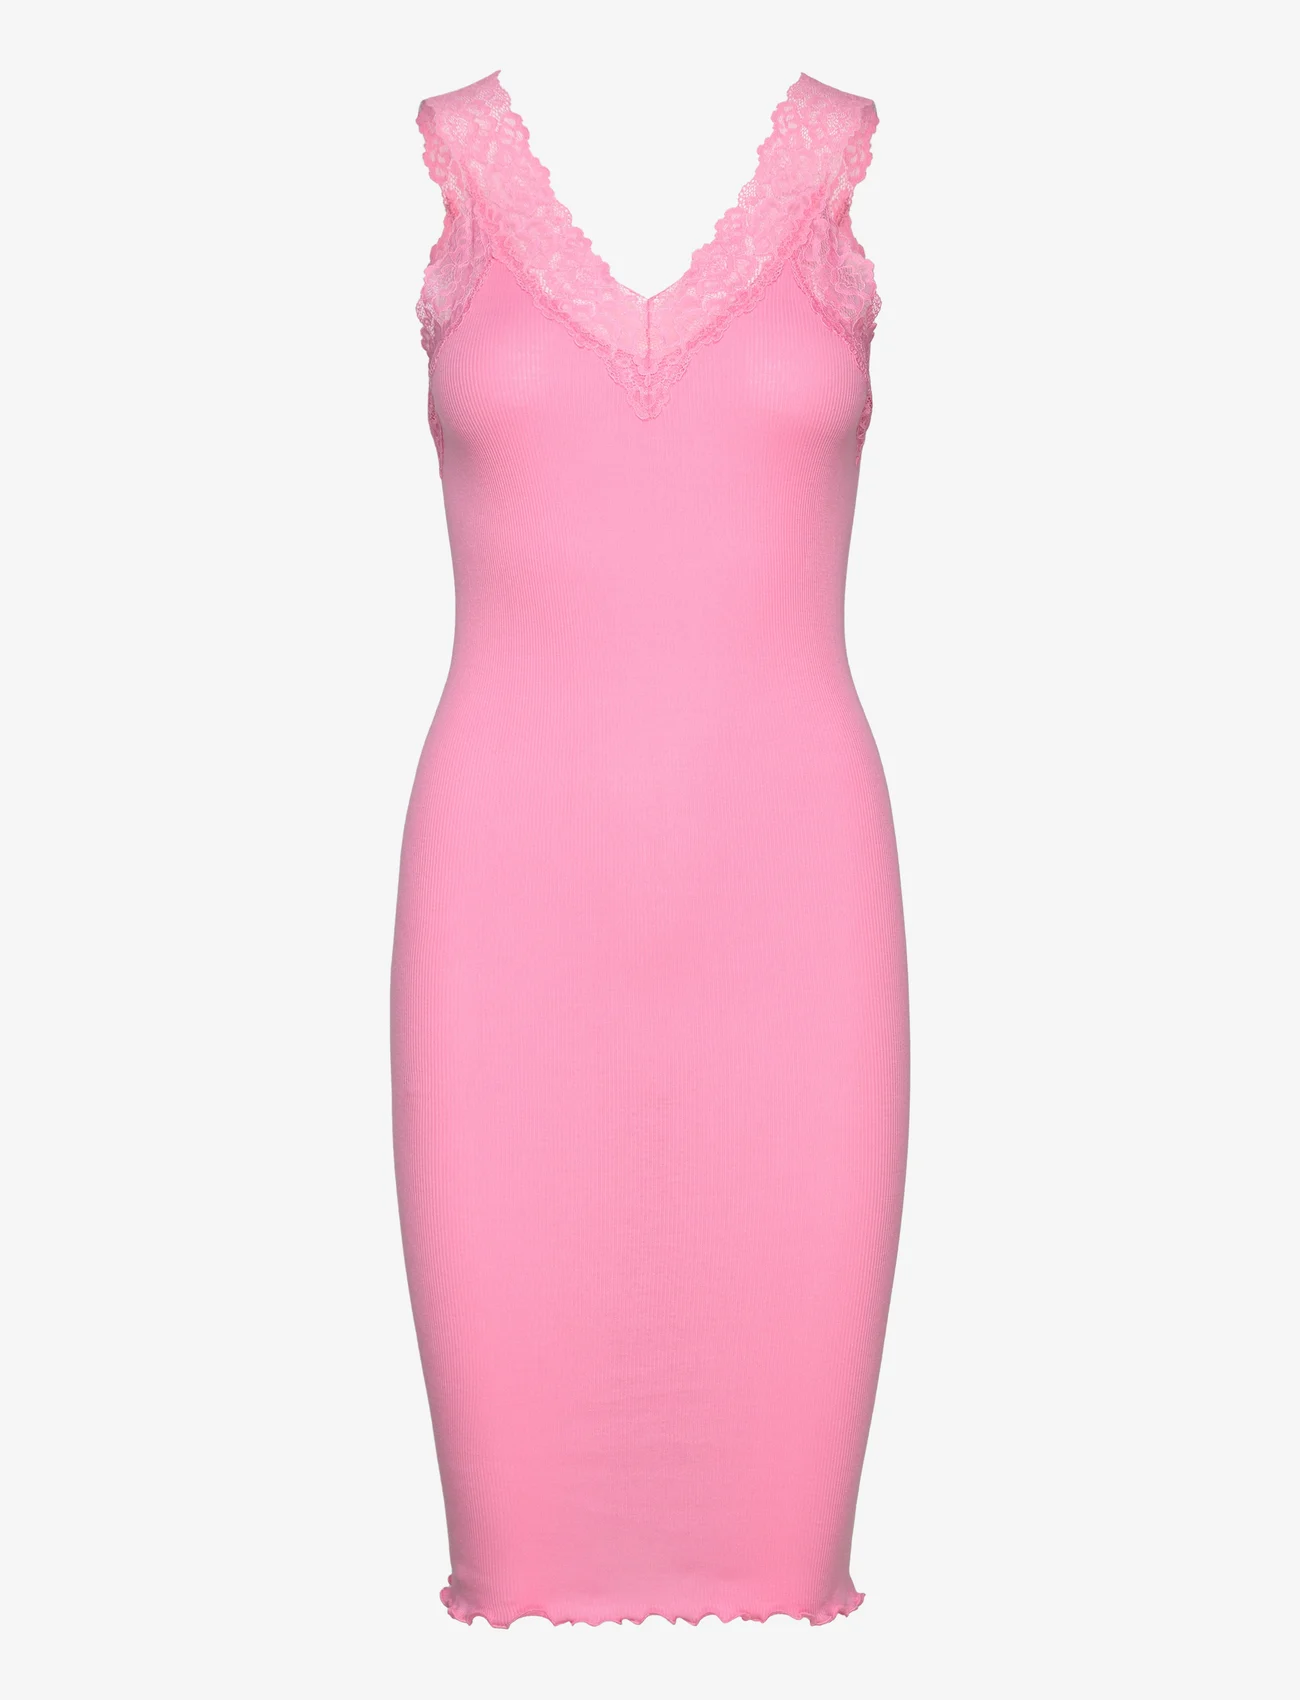 Rosemunde - Organic dress - stramme kjoler - bubblegum pink - 0